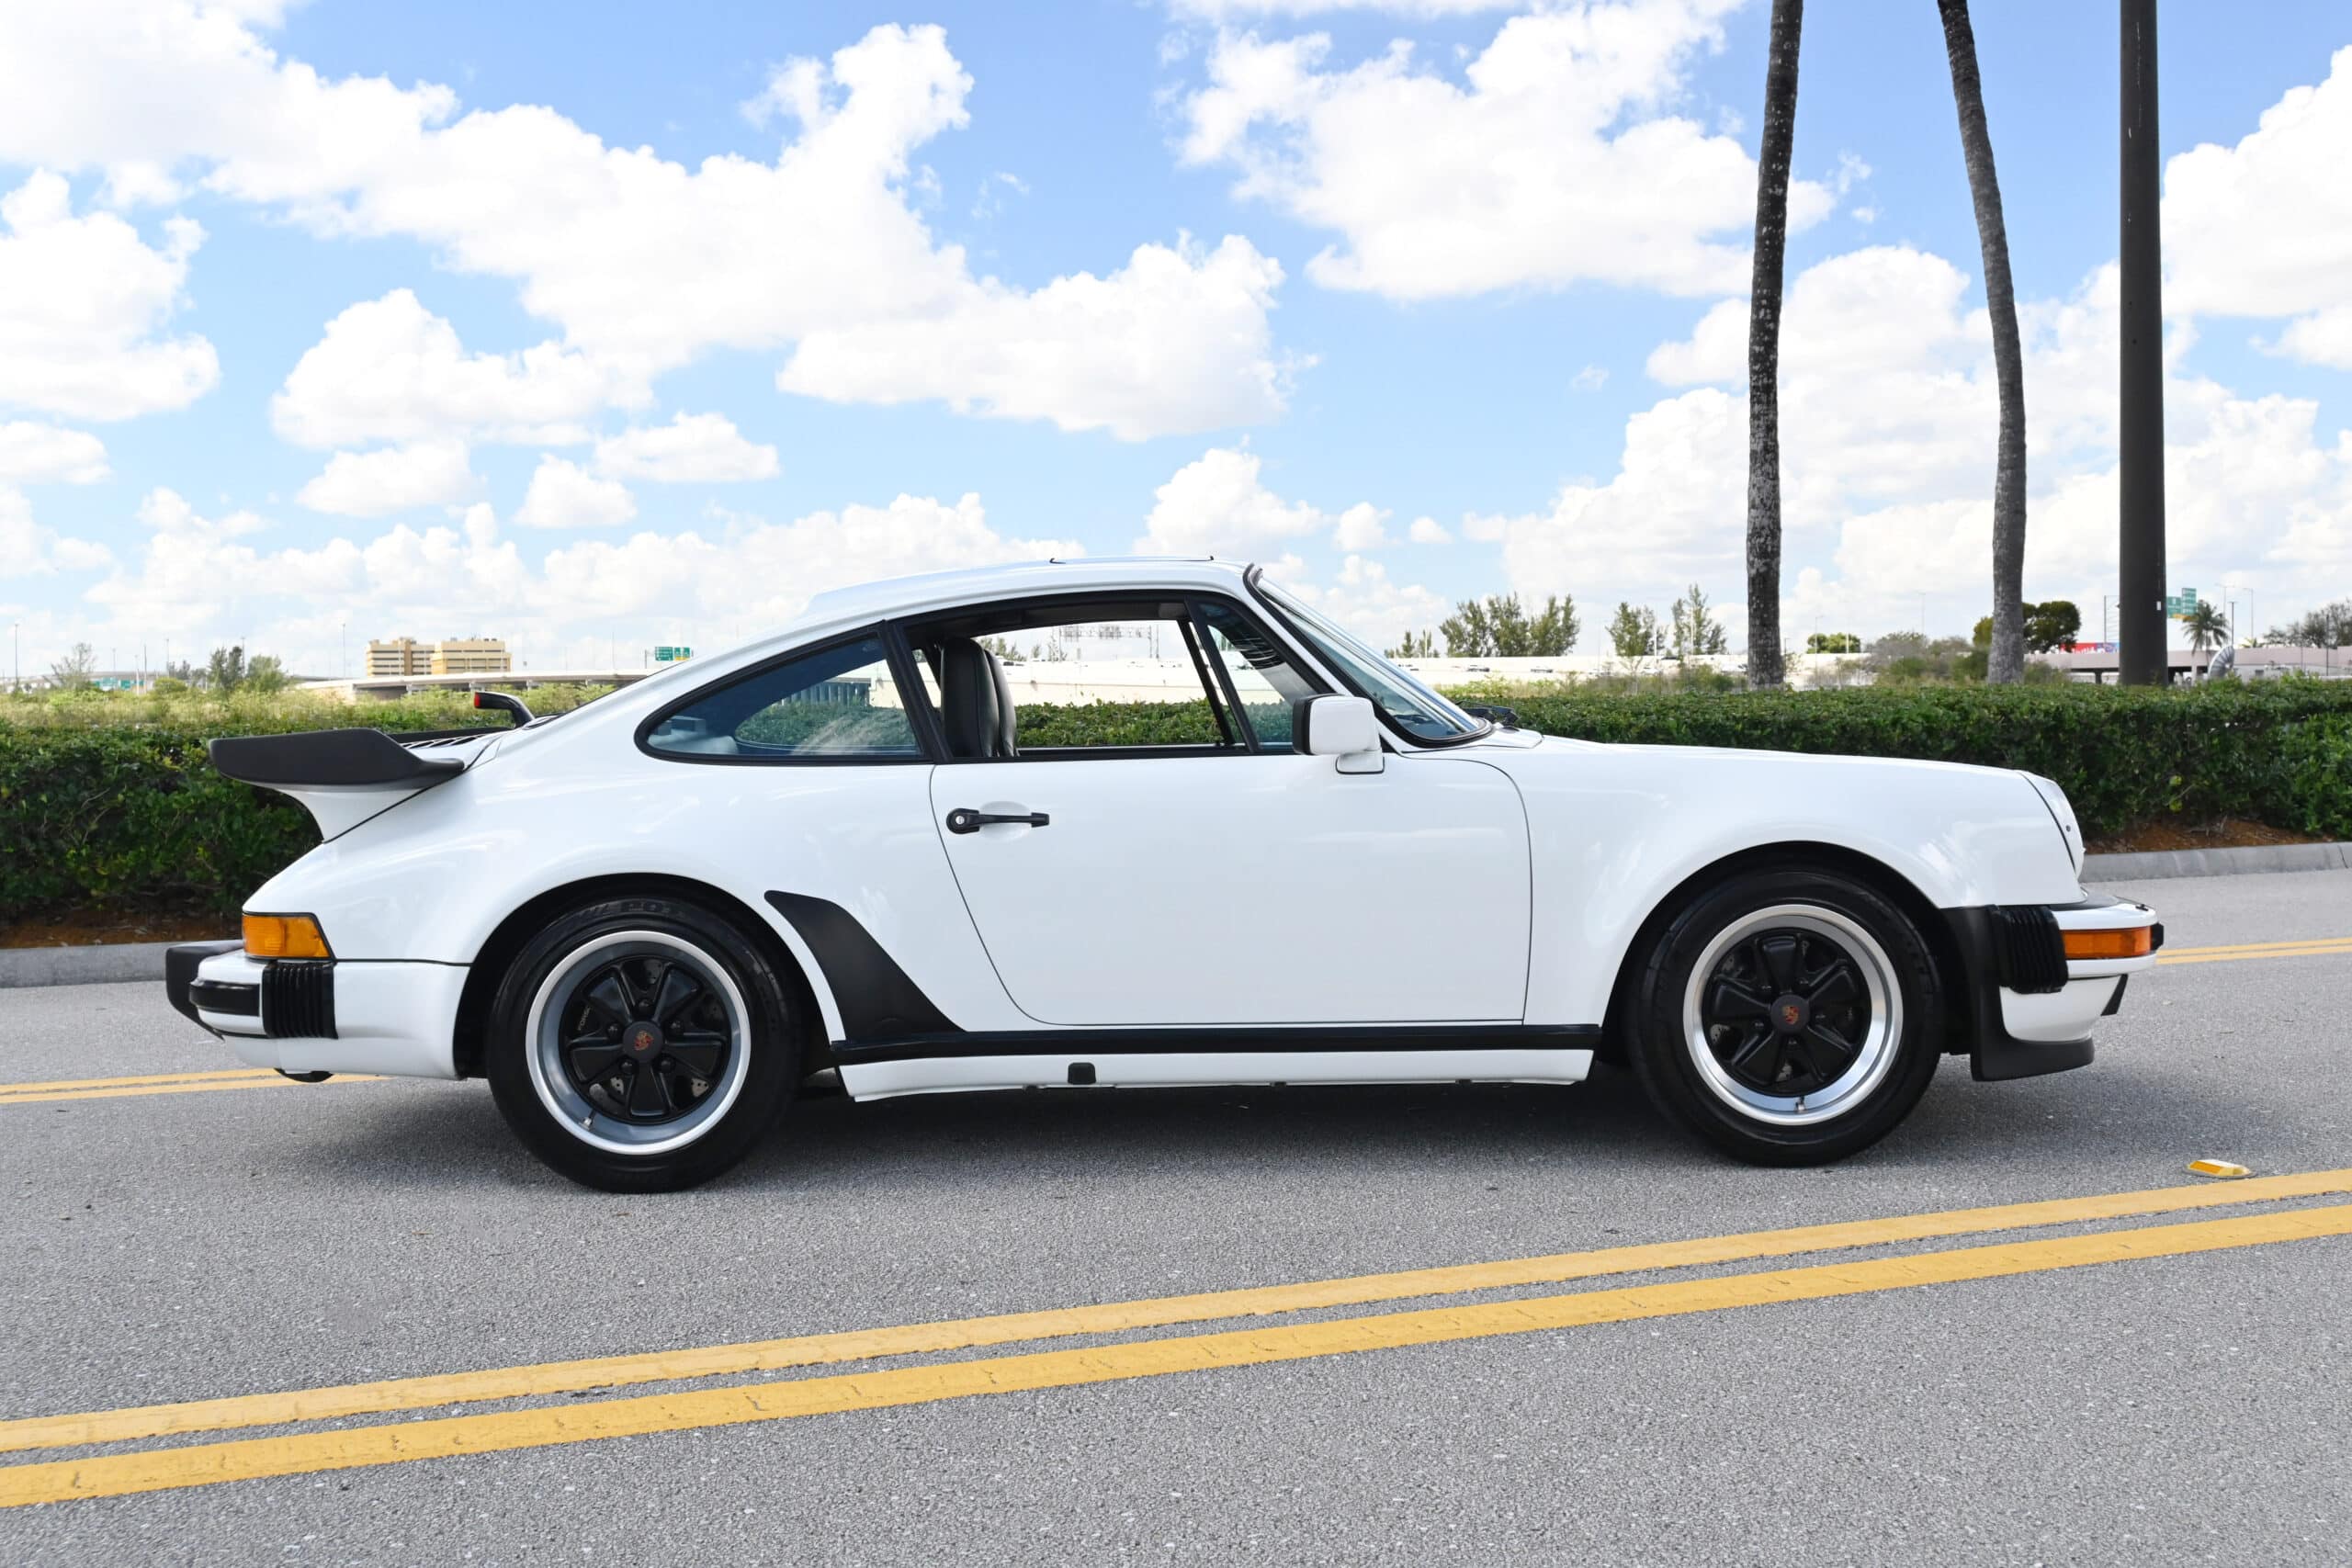 1987 Porsche 911 (930) Turbo, just 40K documented miles since new, Original paint, California car, CoA